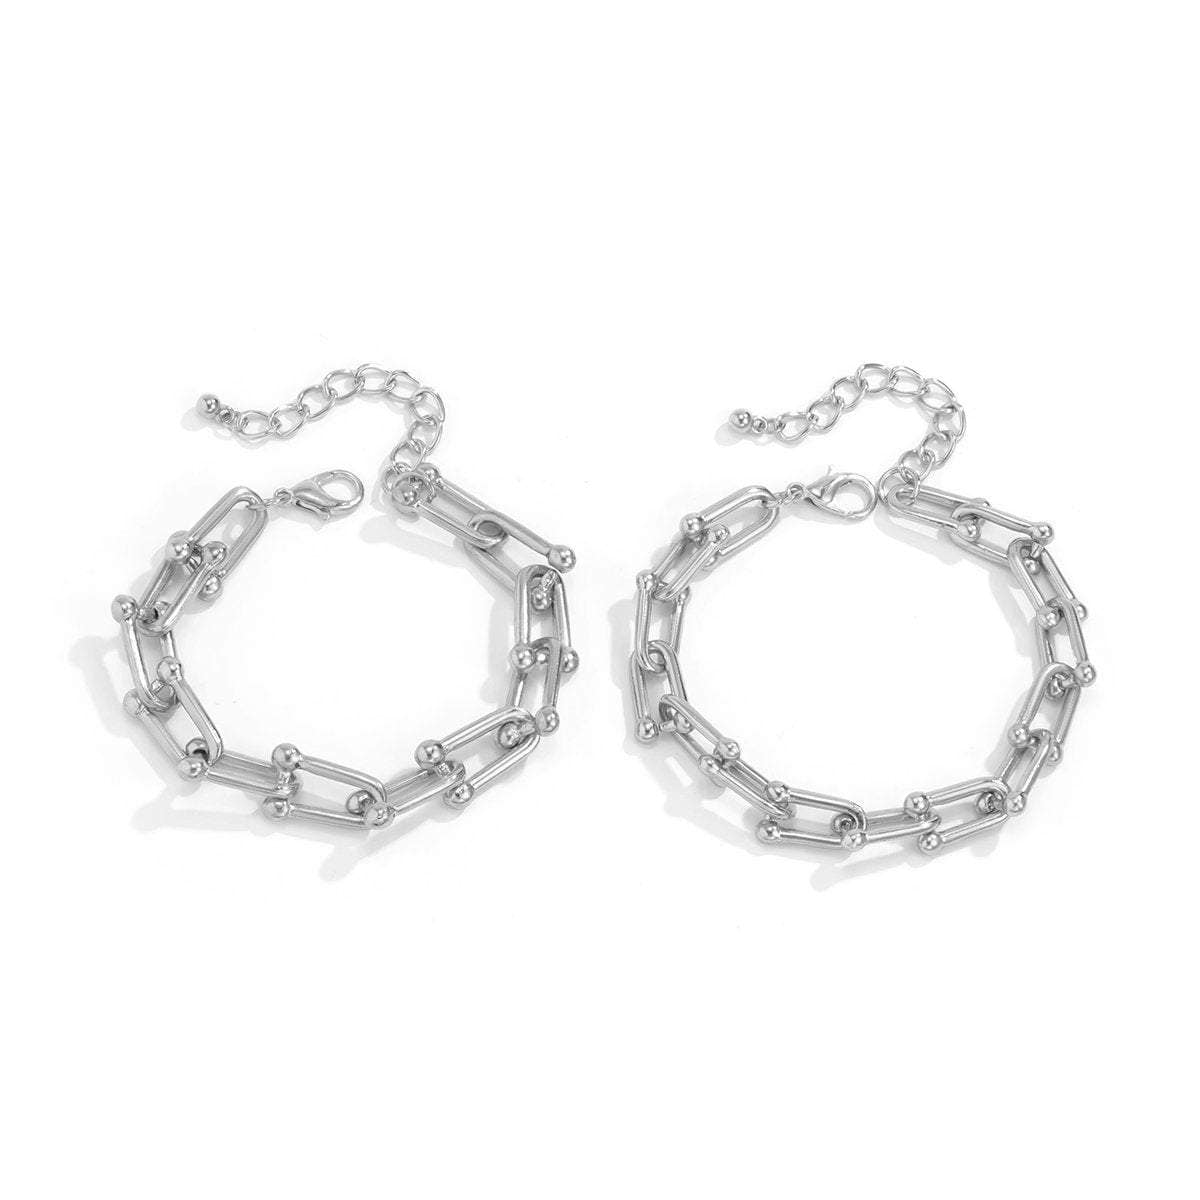 Geometric Layered U Shaped Tiffany Link Chain Stackable Bracelets